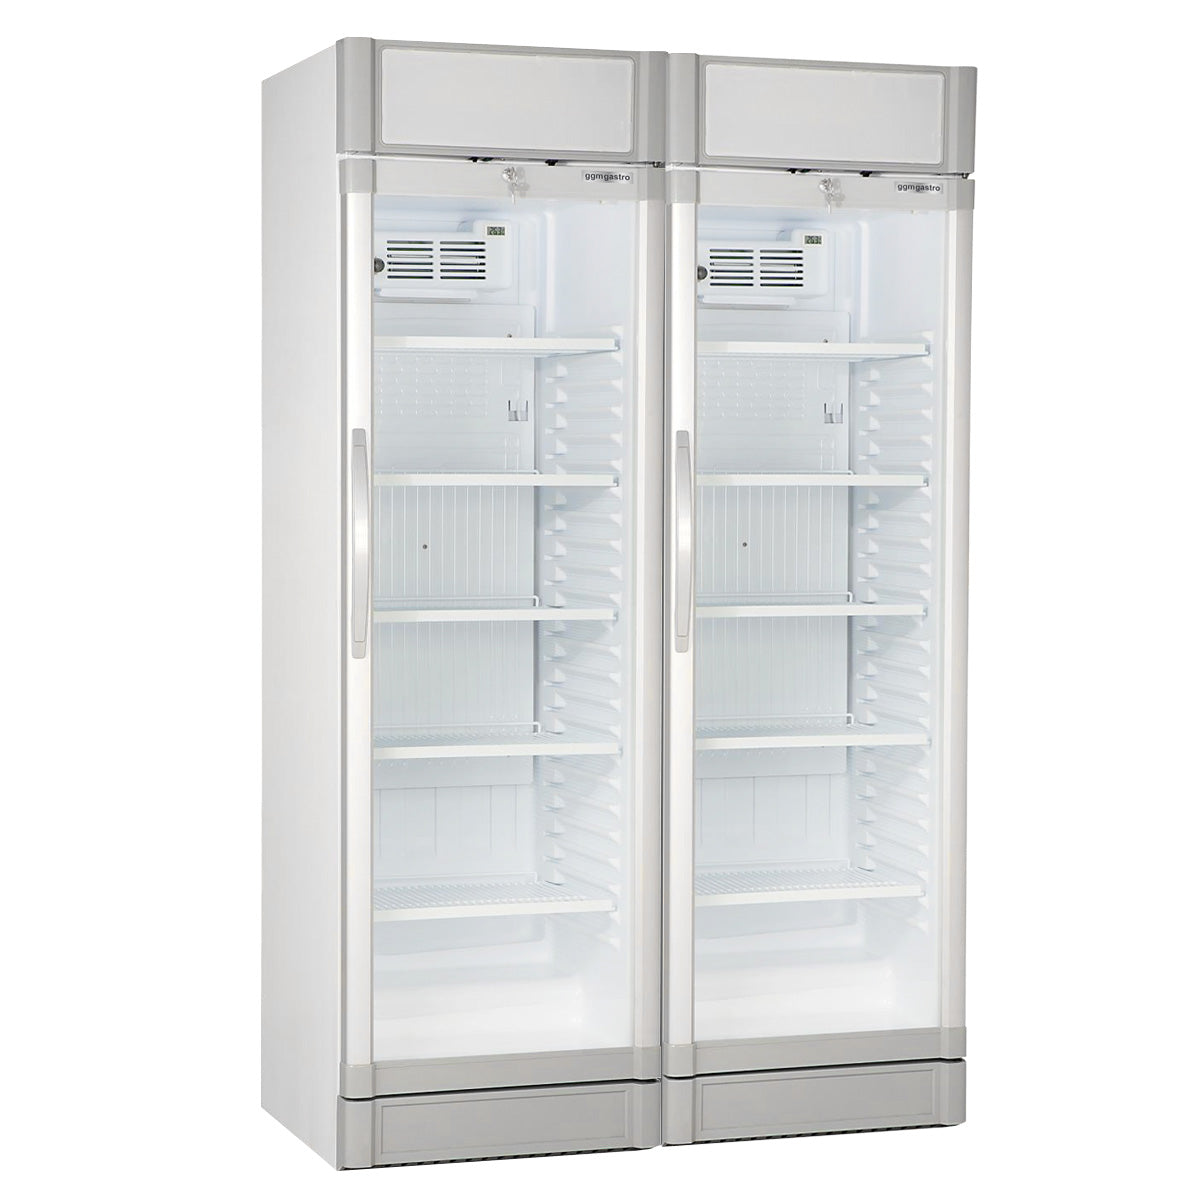 (2 stk) Flaskekøleskab - 690 liter (Total) - Hvid/Grå